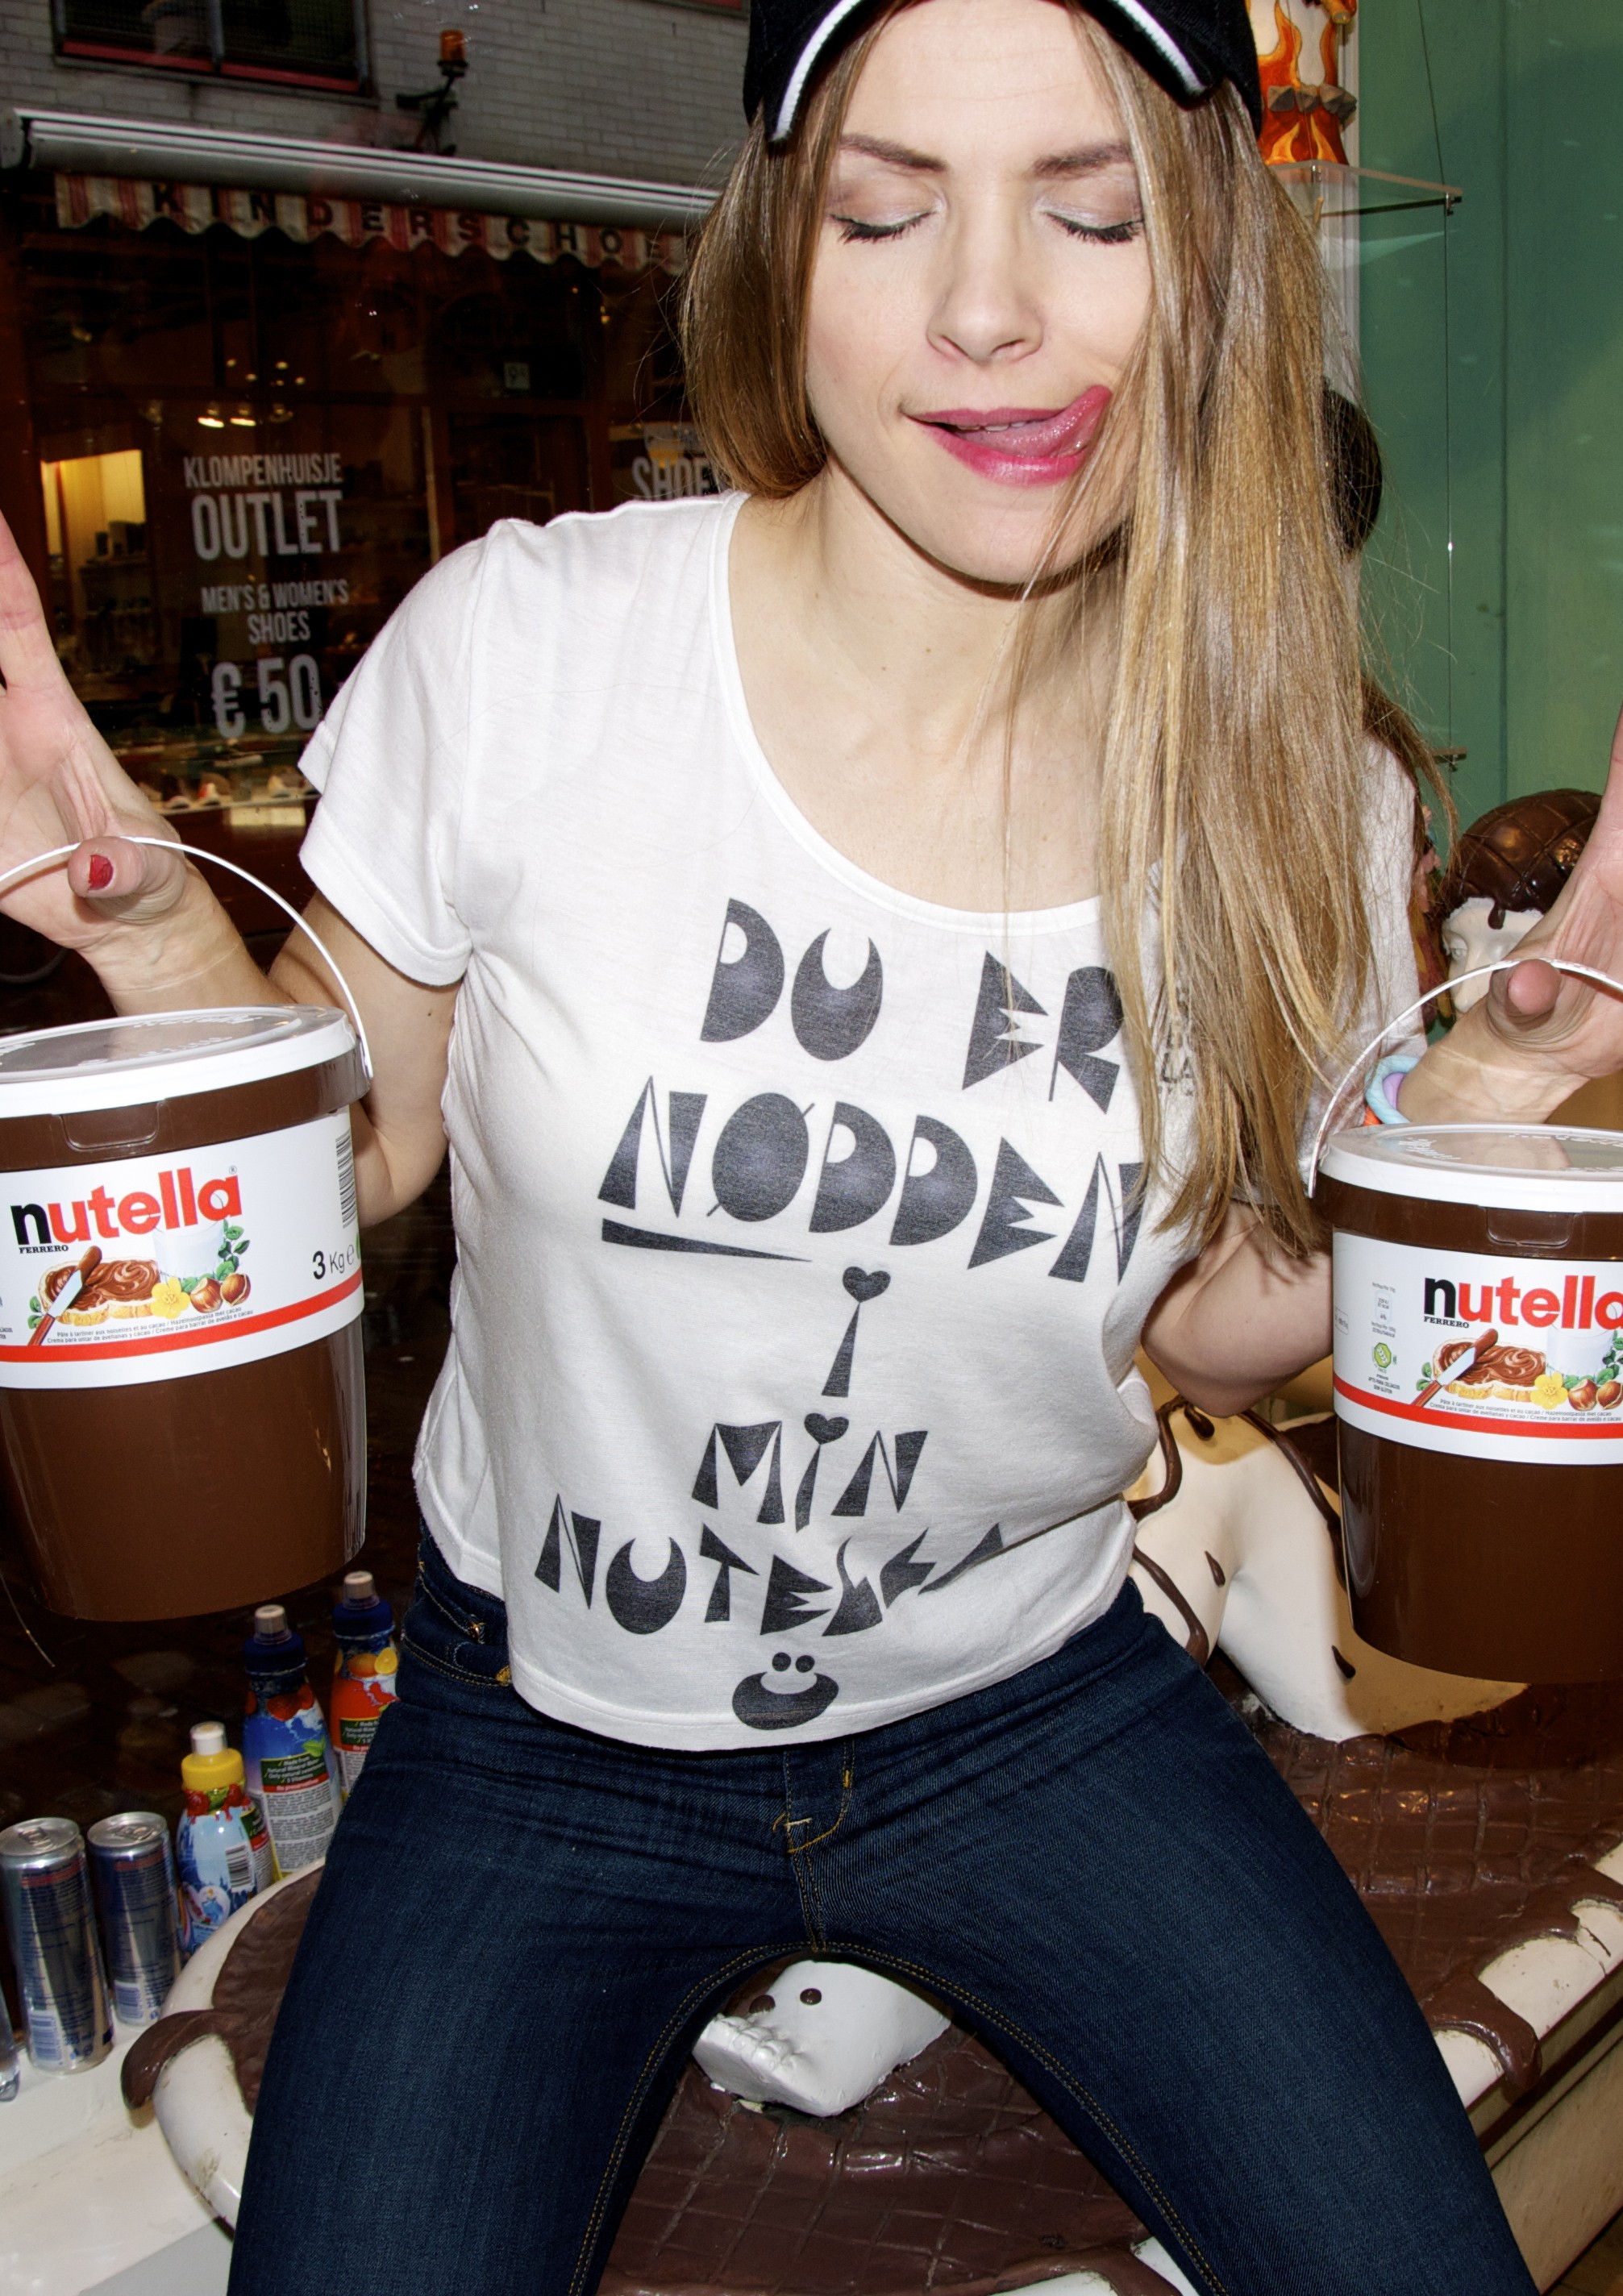 Du er nødden i nutella T-shirt